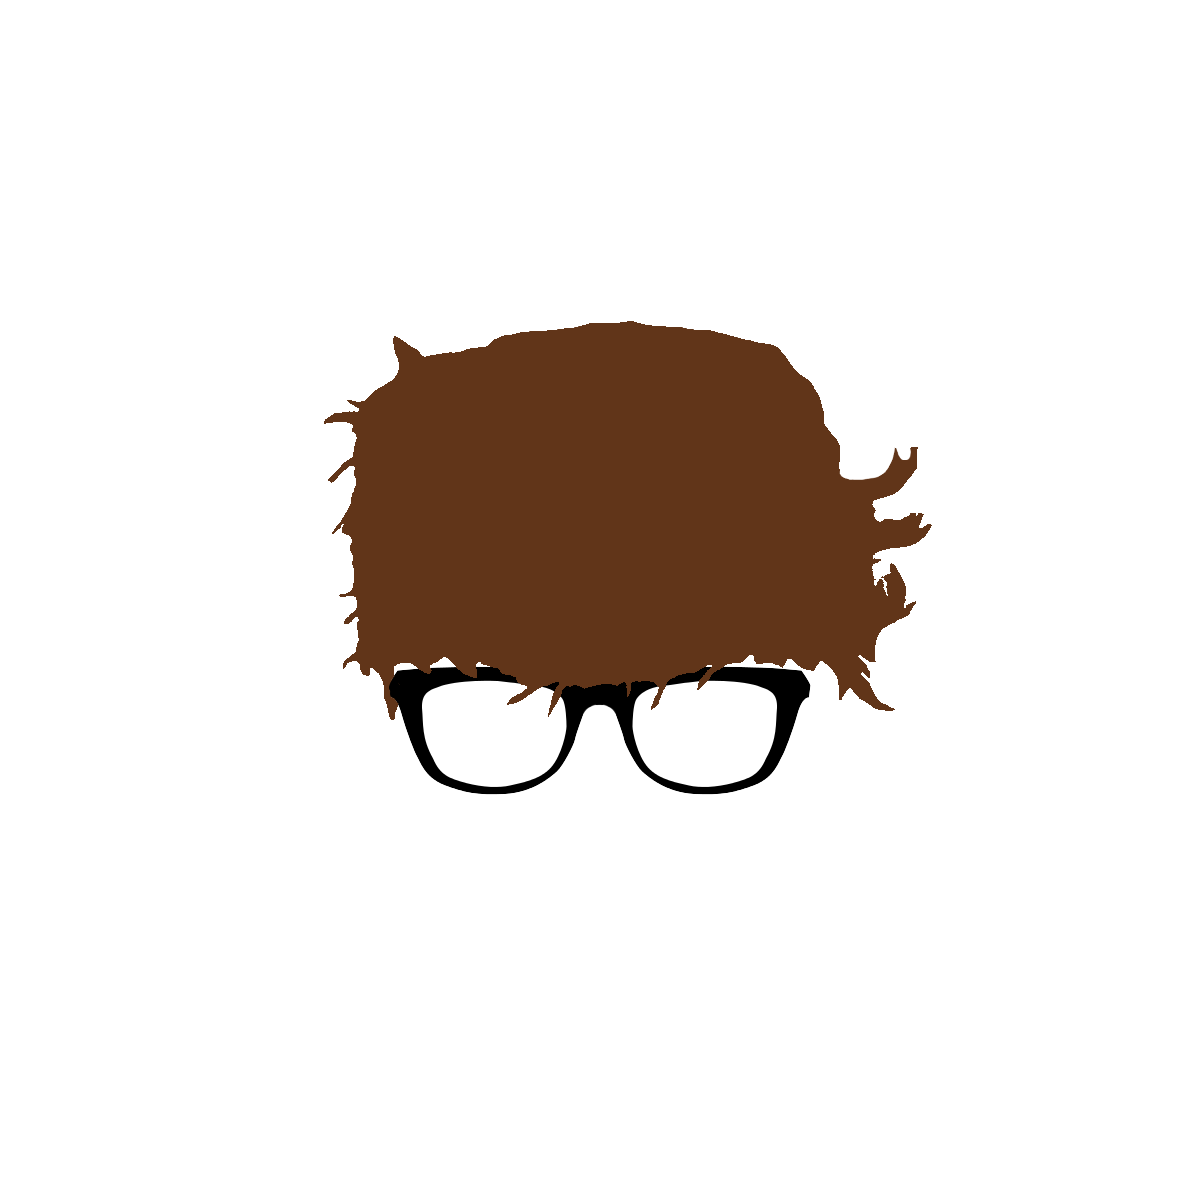 Alternate Hipster Hair and Glasses Combo